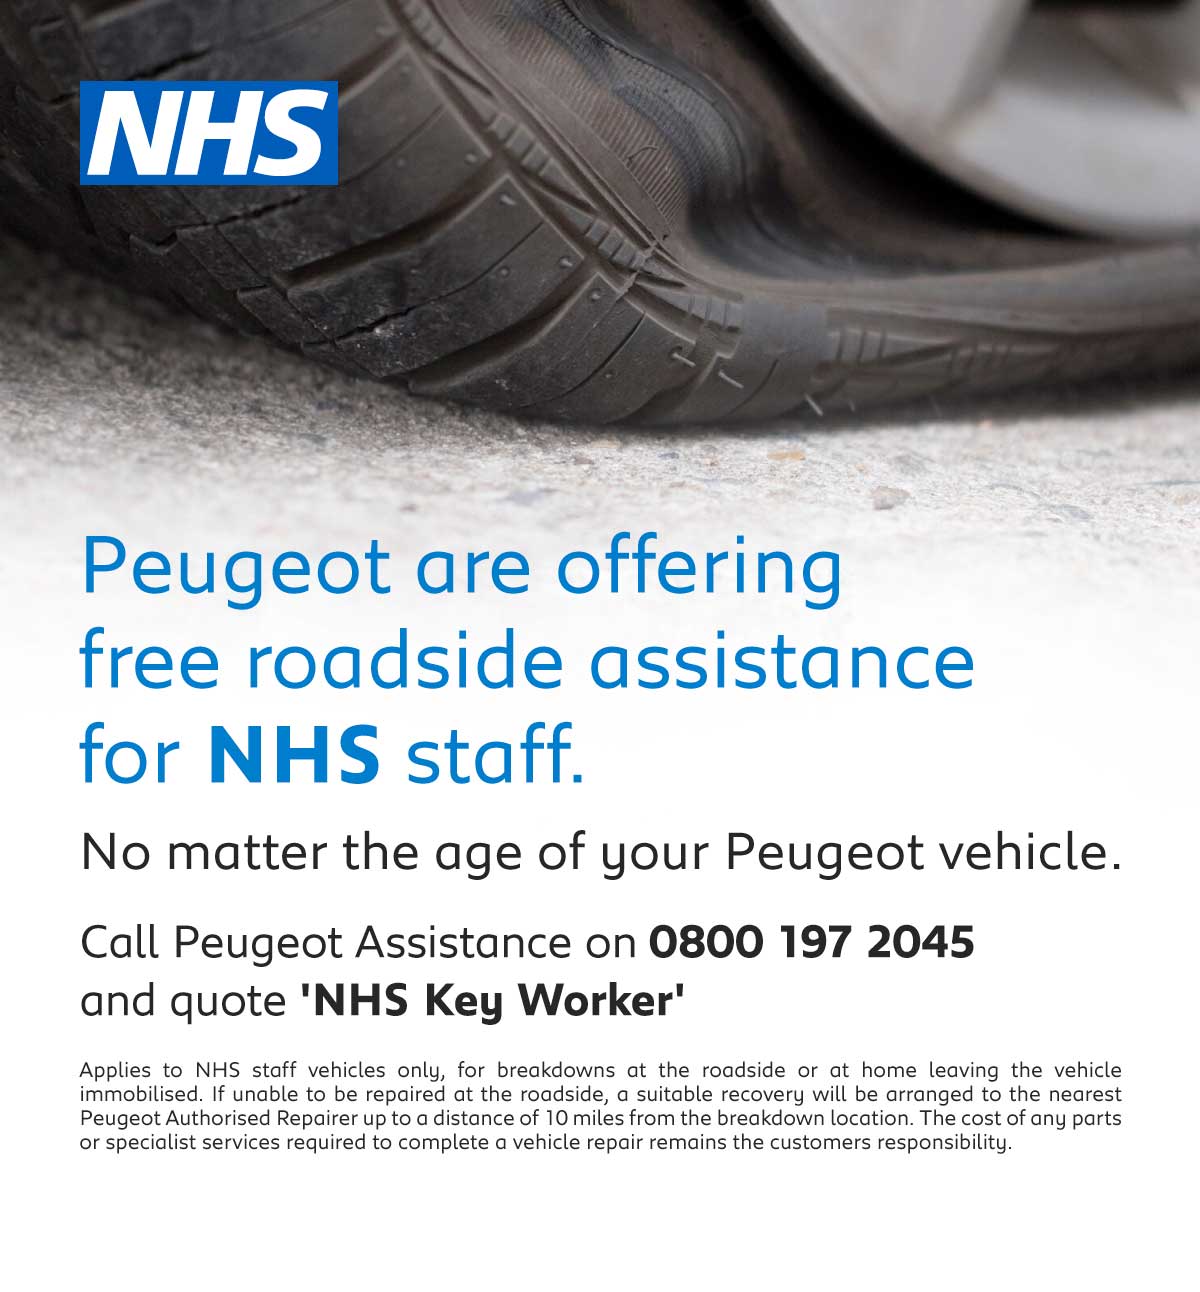 Peugeot NHS Free Roadside Assistance